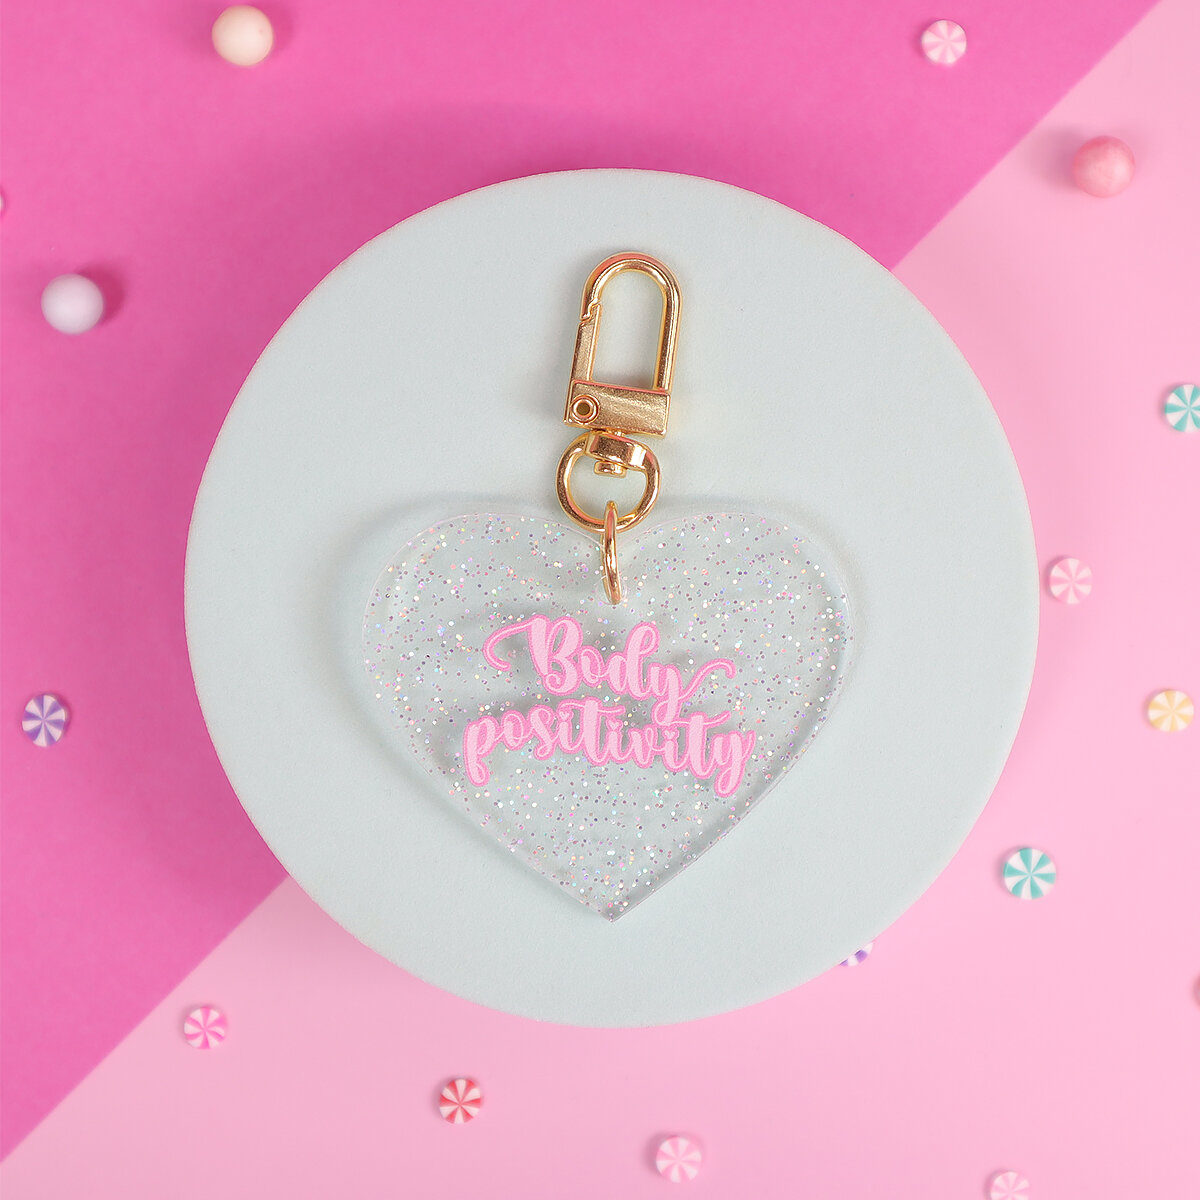 Glitter heart key ring - Body positivity